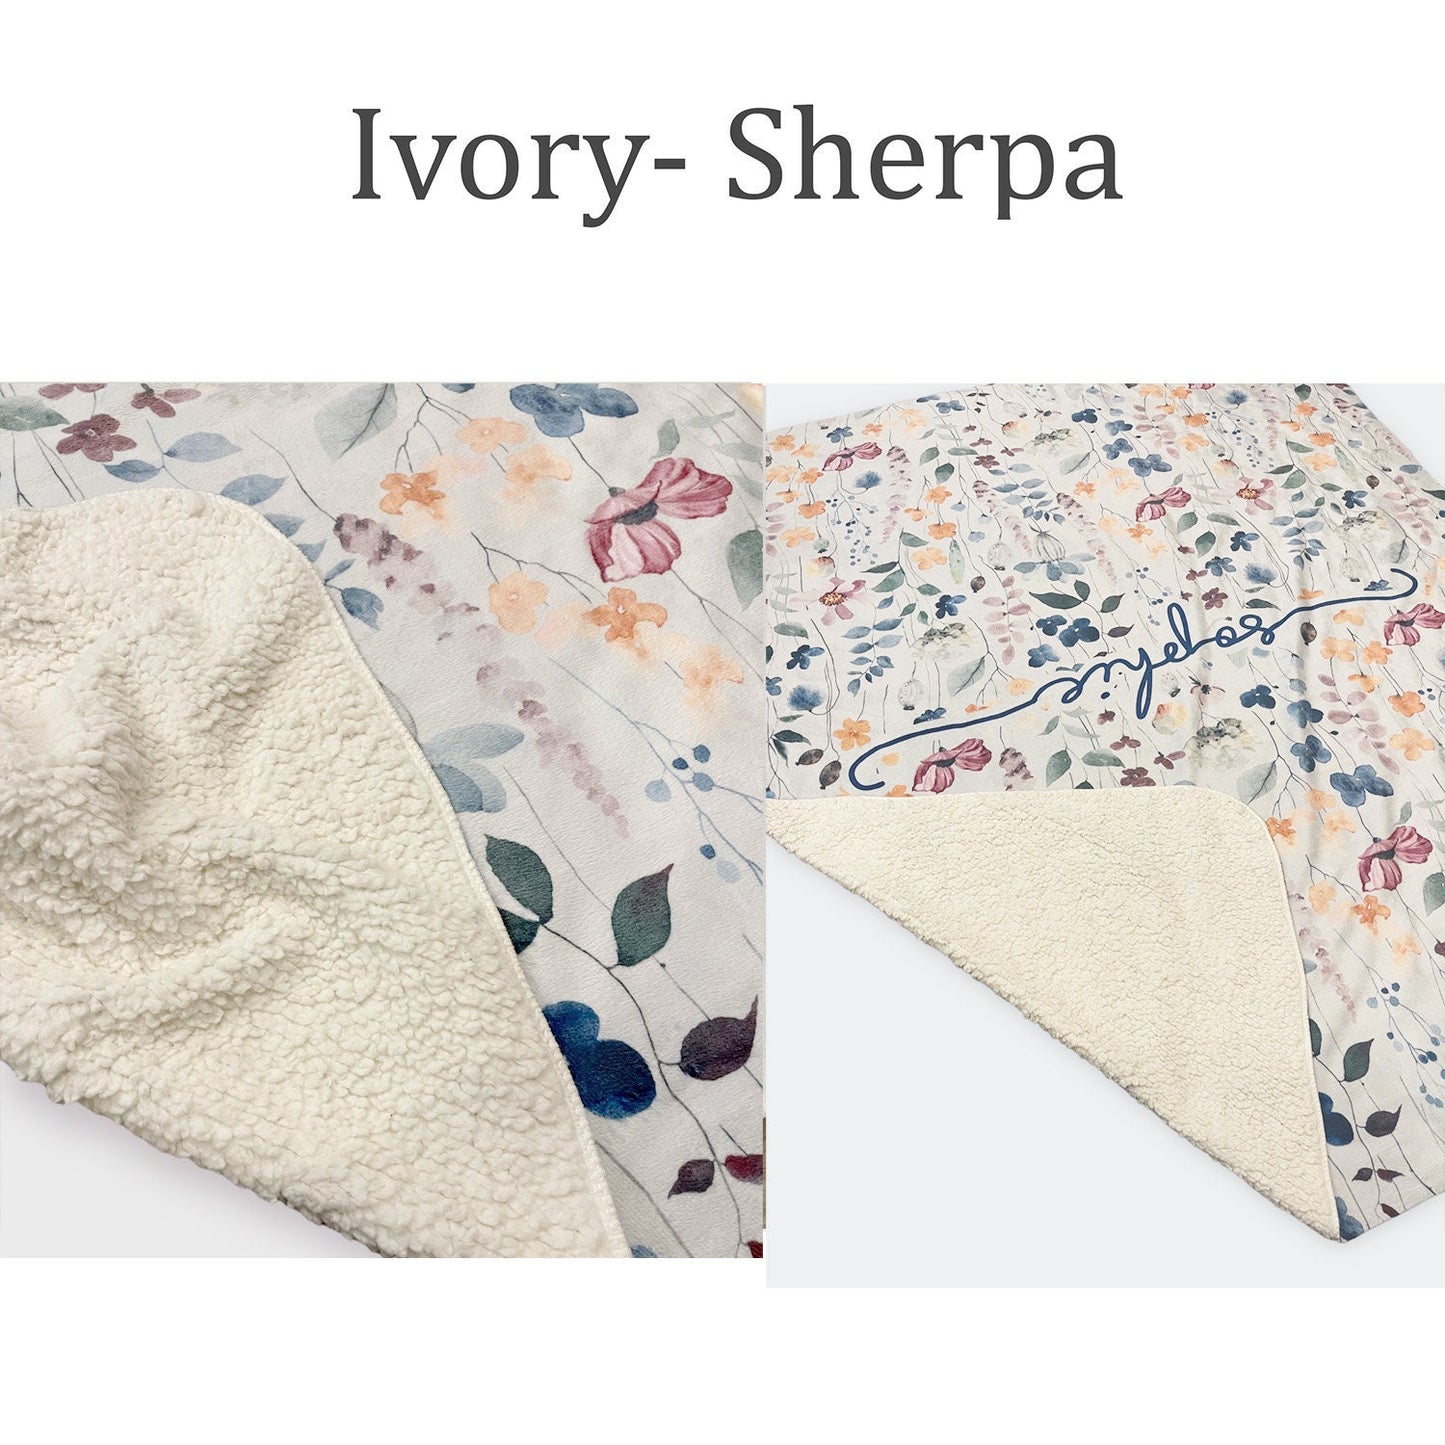 Retro Design personalize blanket, Minky or Sherpa custom blanket, Baby blanket, birthday gift idea